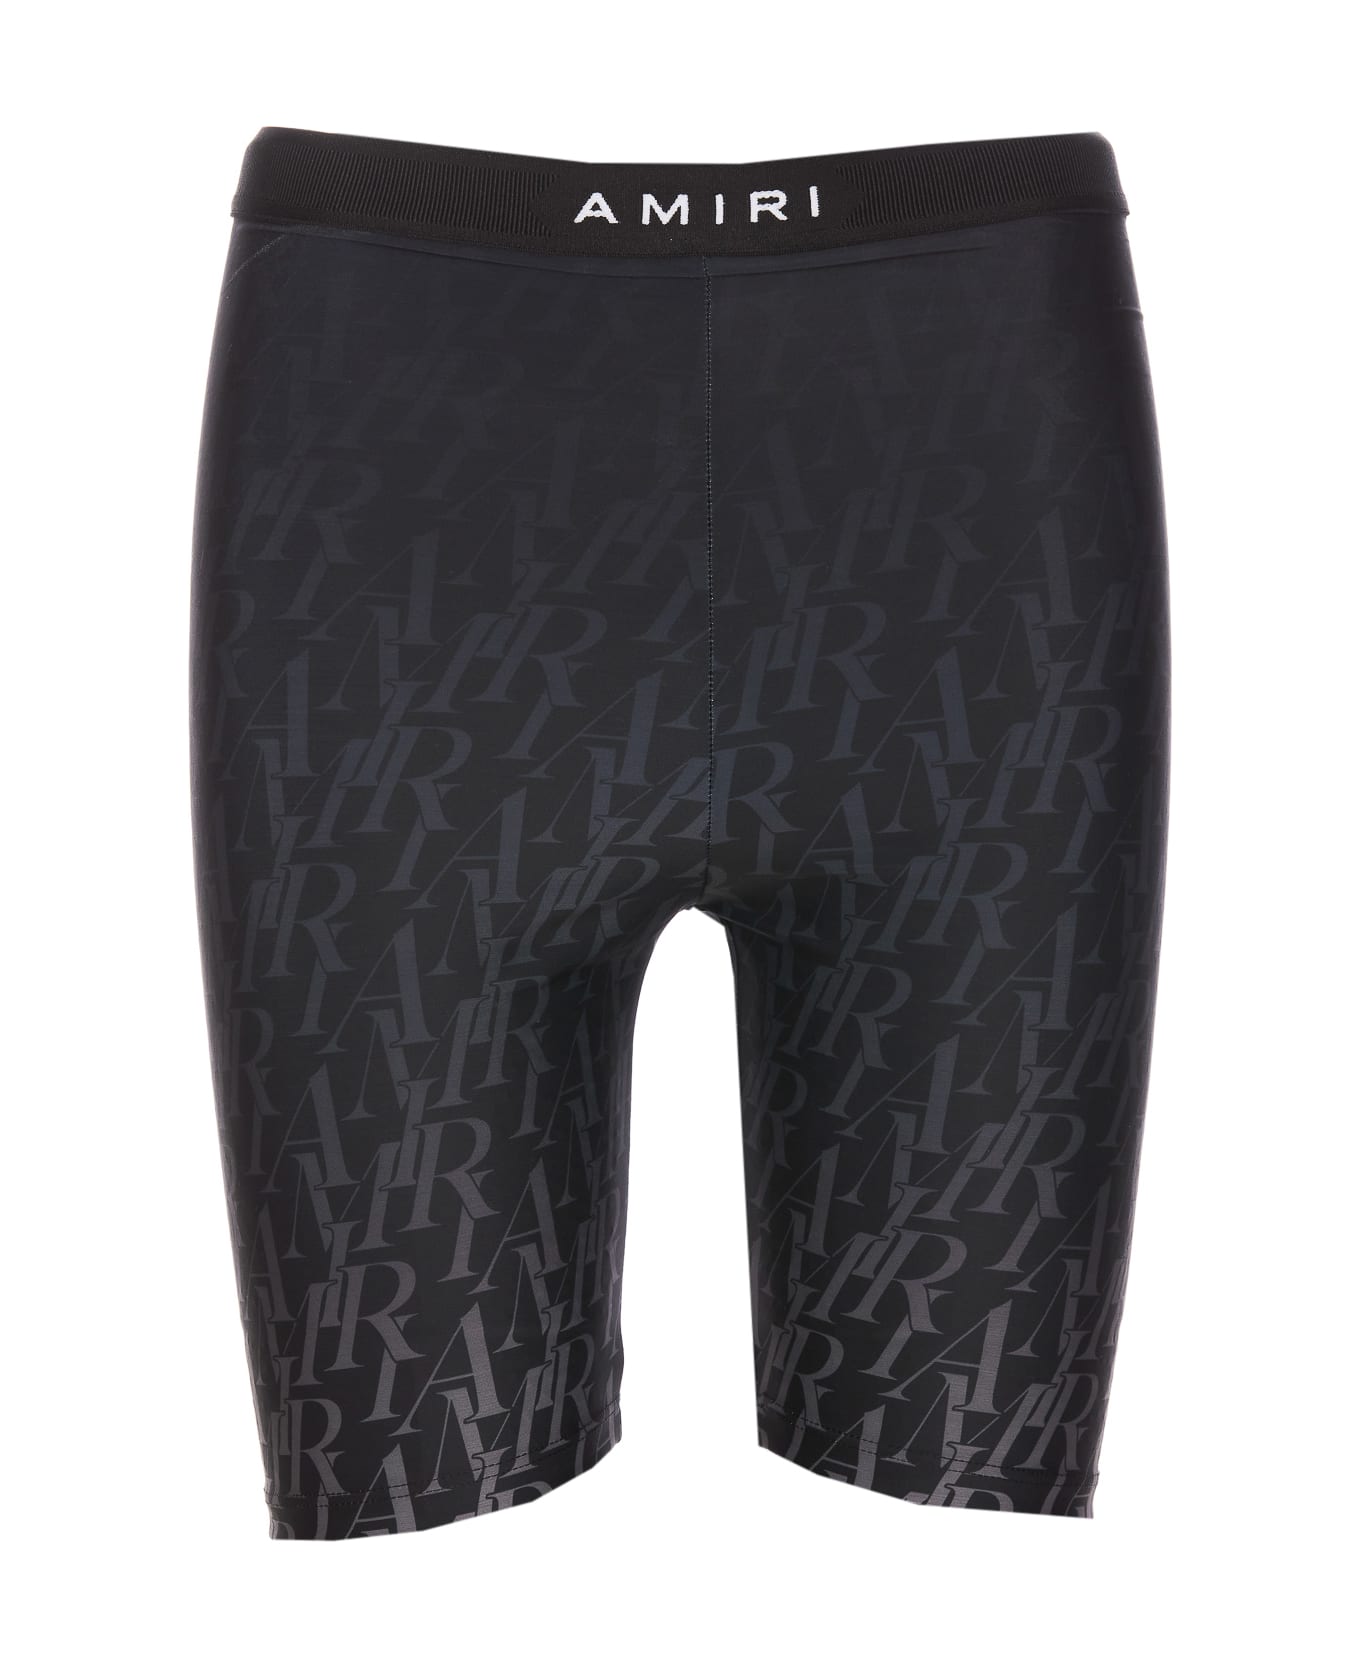 AMIRI Burnout Cycling Shorts - Black